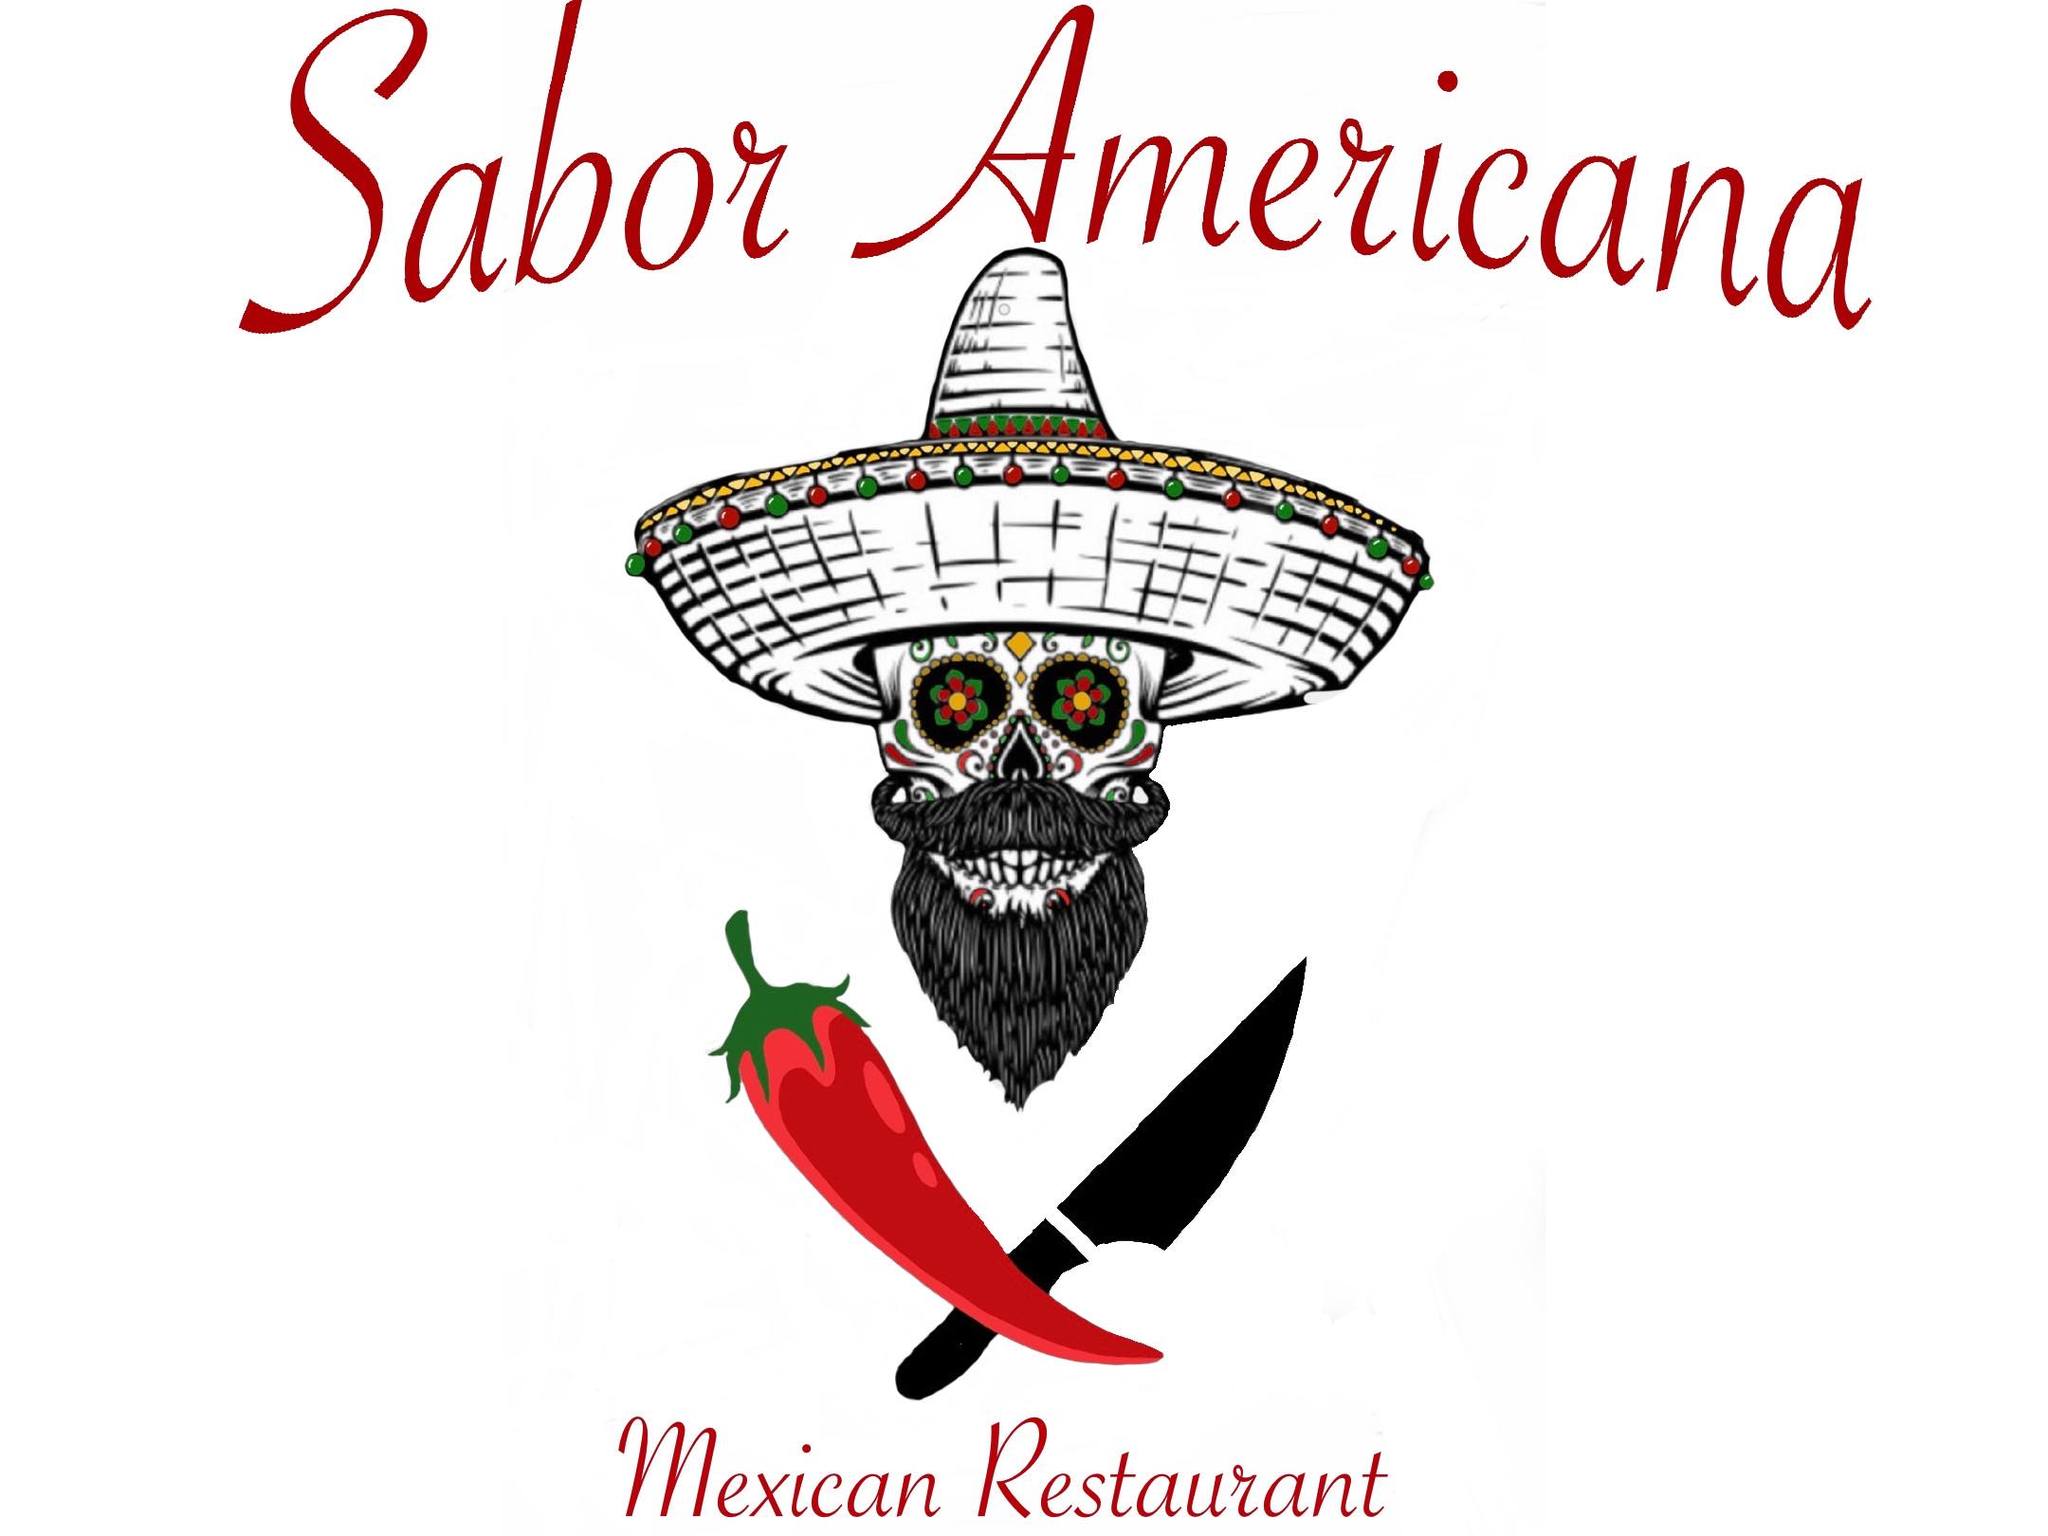 Sabor Americana Mexican Restaurant